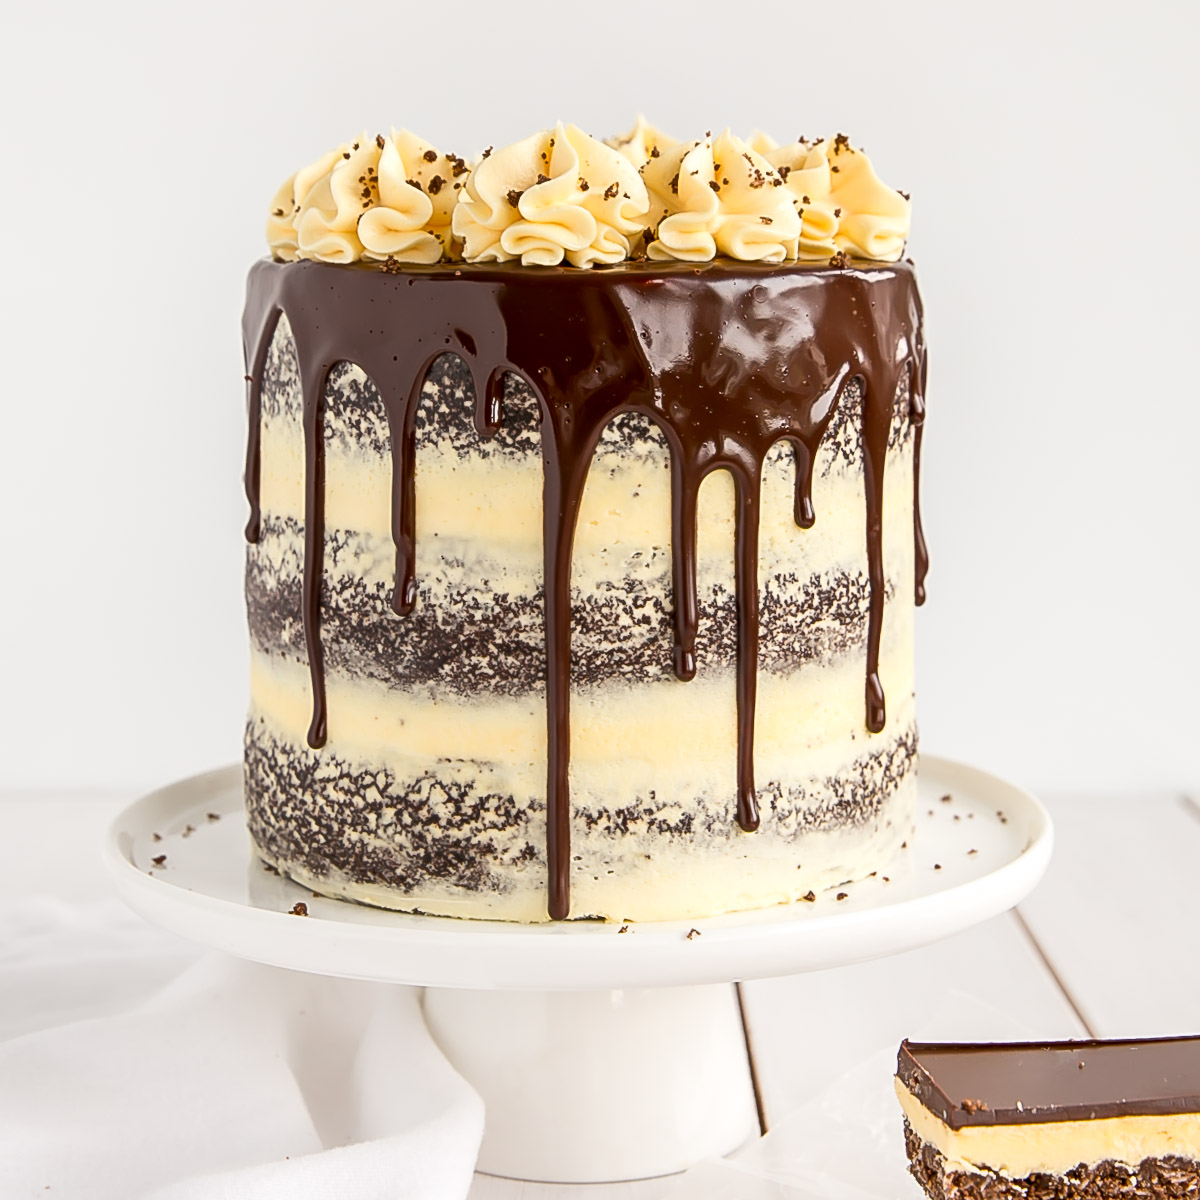 Choc cake | Candy bar cake, Chocolate bar cakes, Chocolate cake decoration